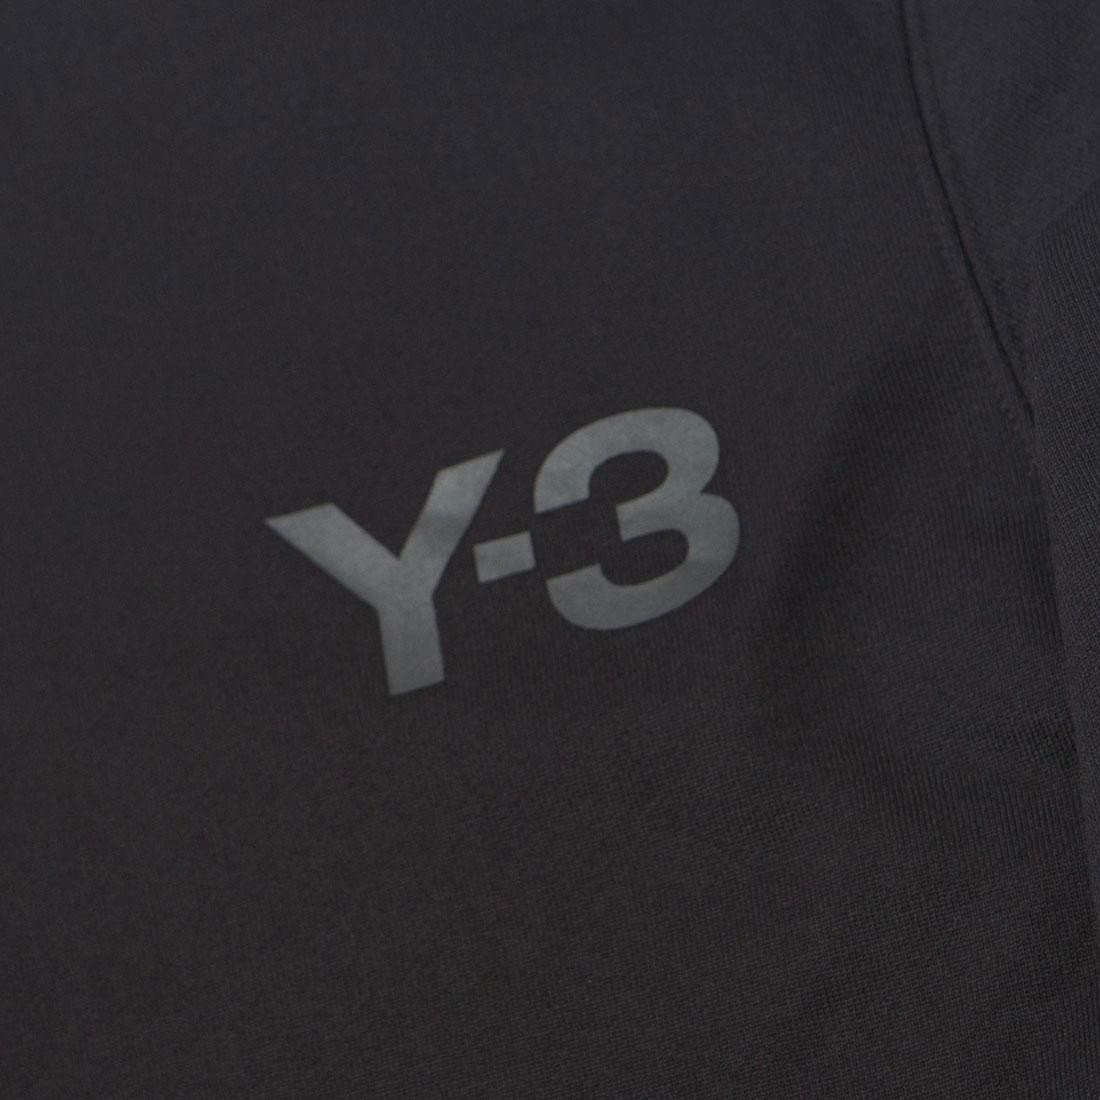 Adidas Y-3 Men Classic Logo Front Crew Sweater black